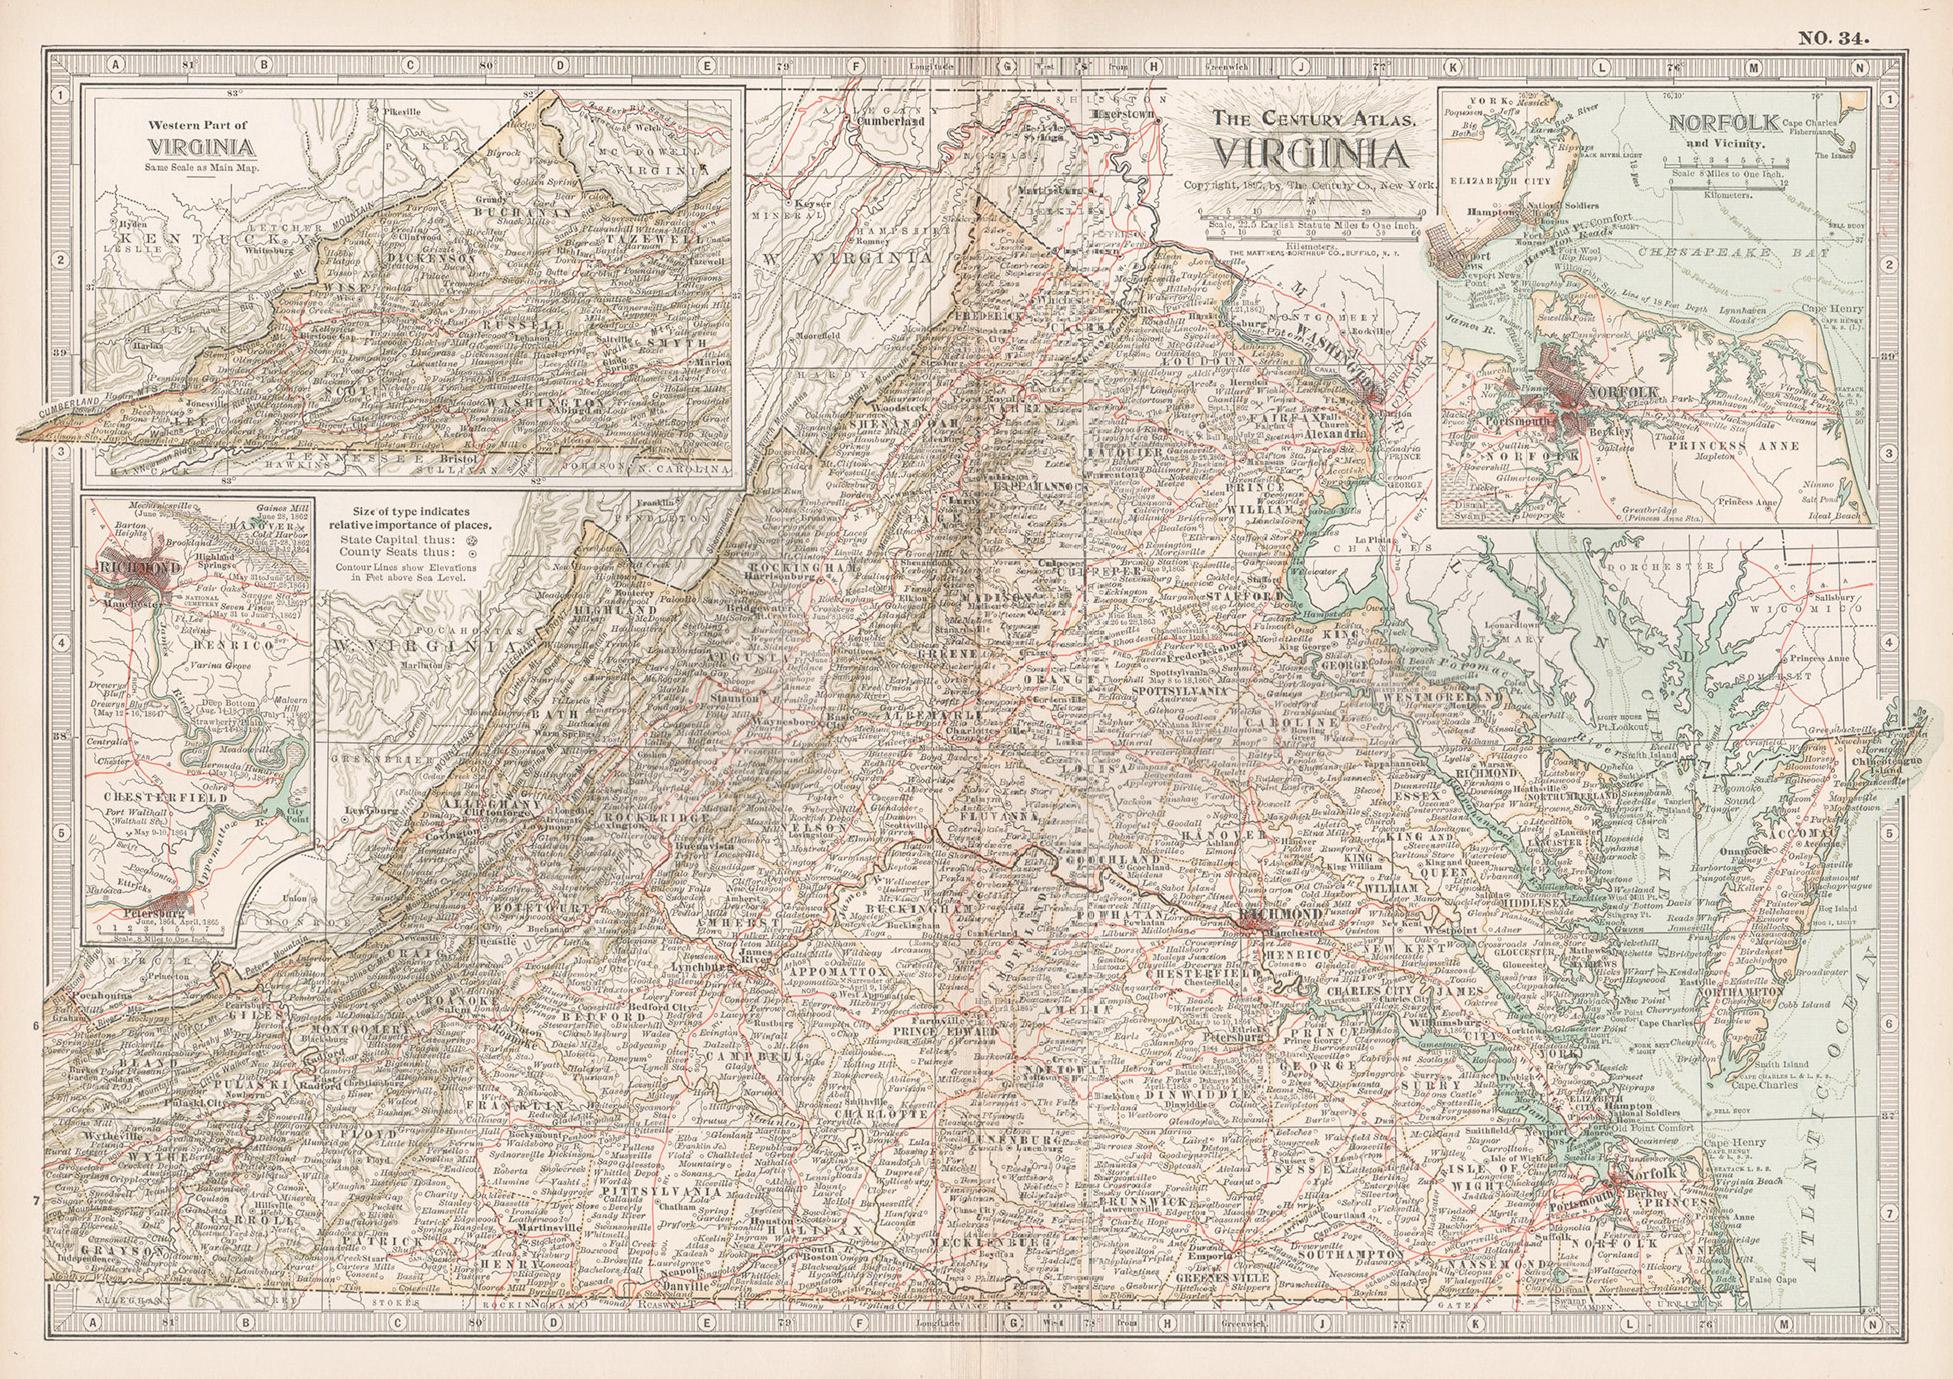 Unknown Print - Virginia. USA. Century Atlas state antique vintage map